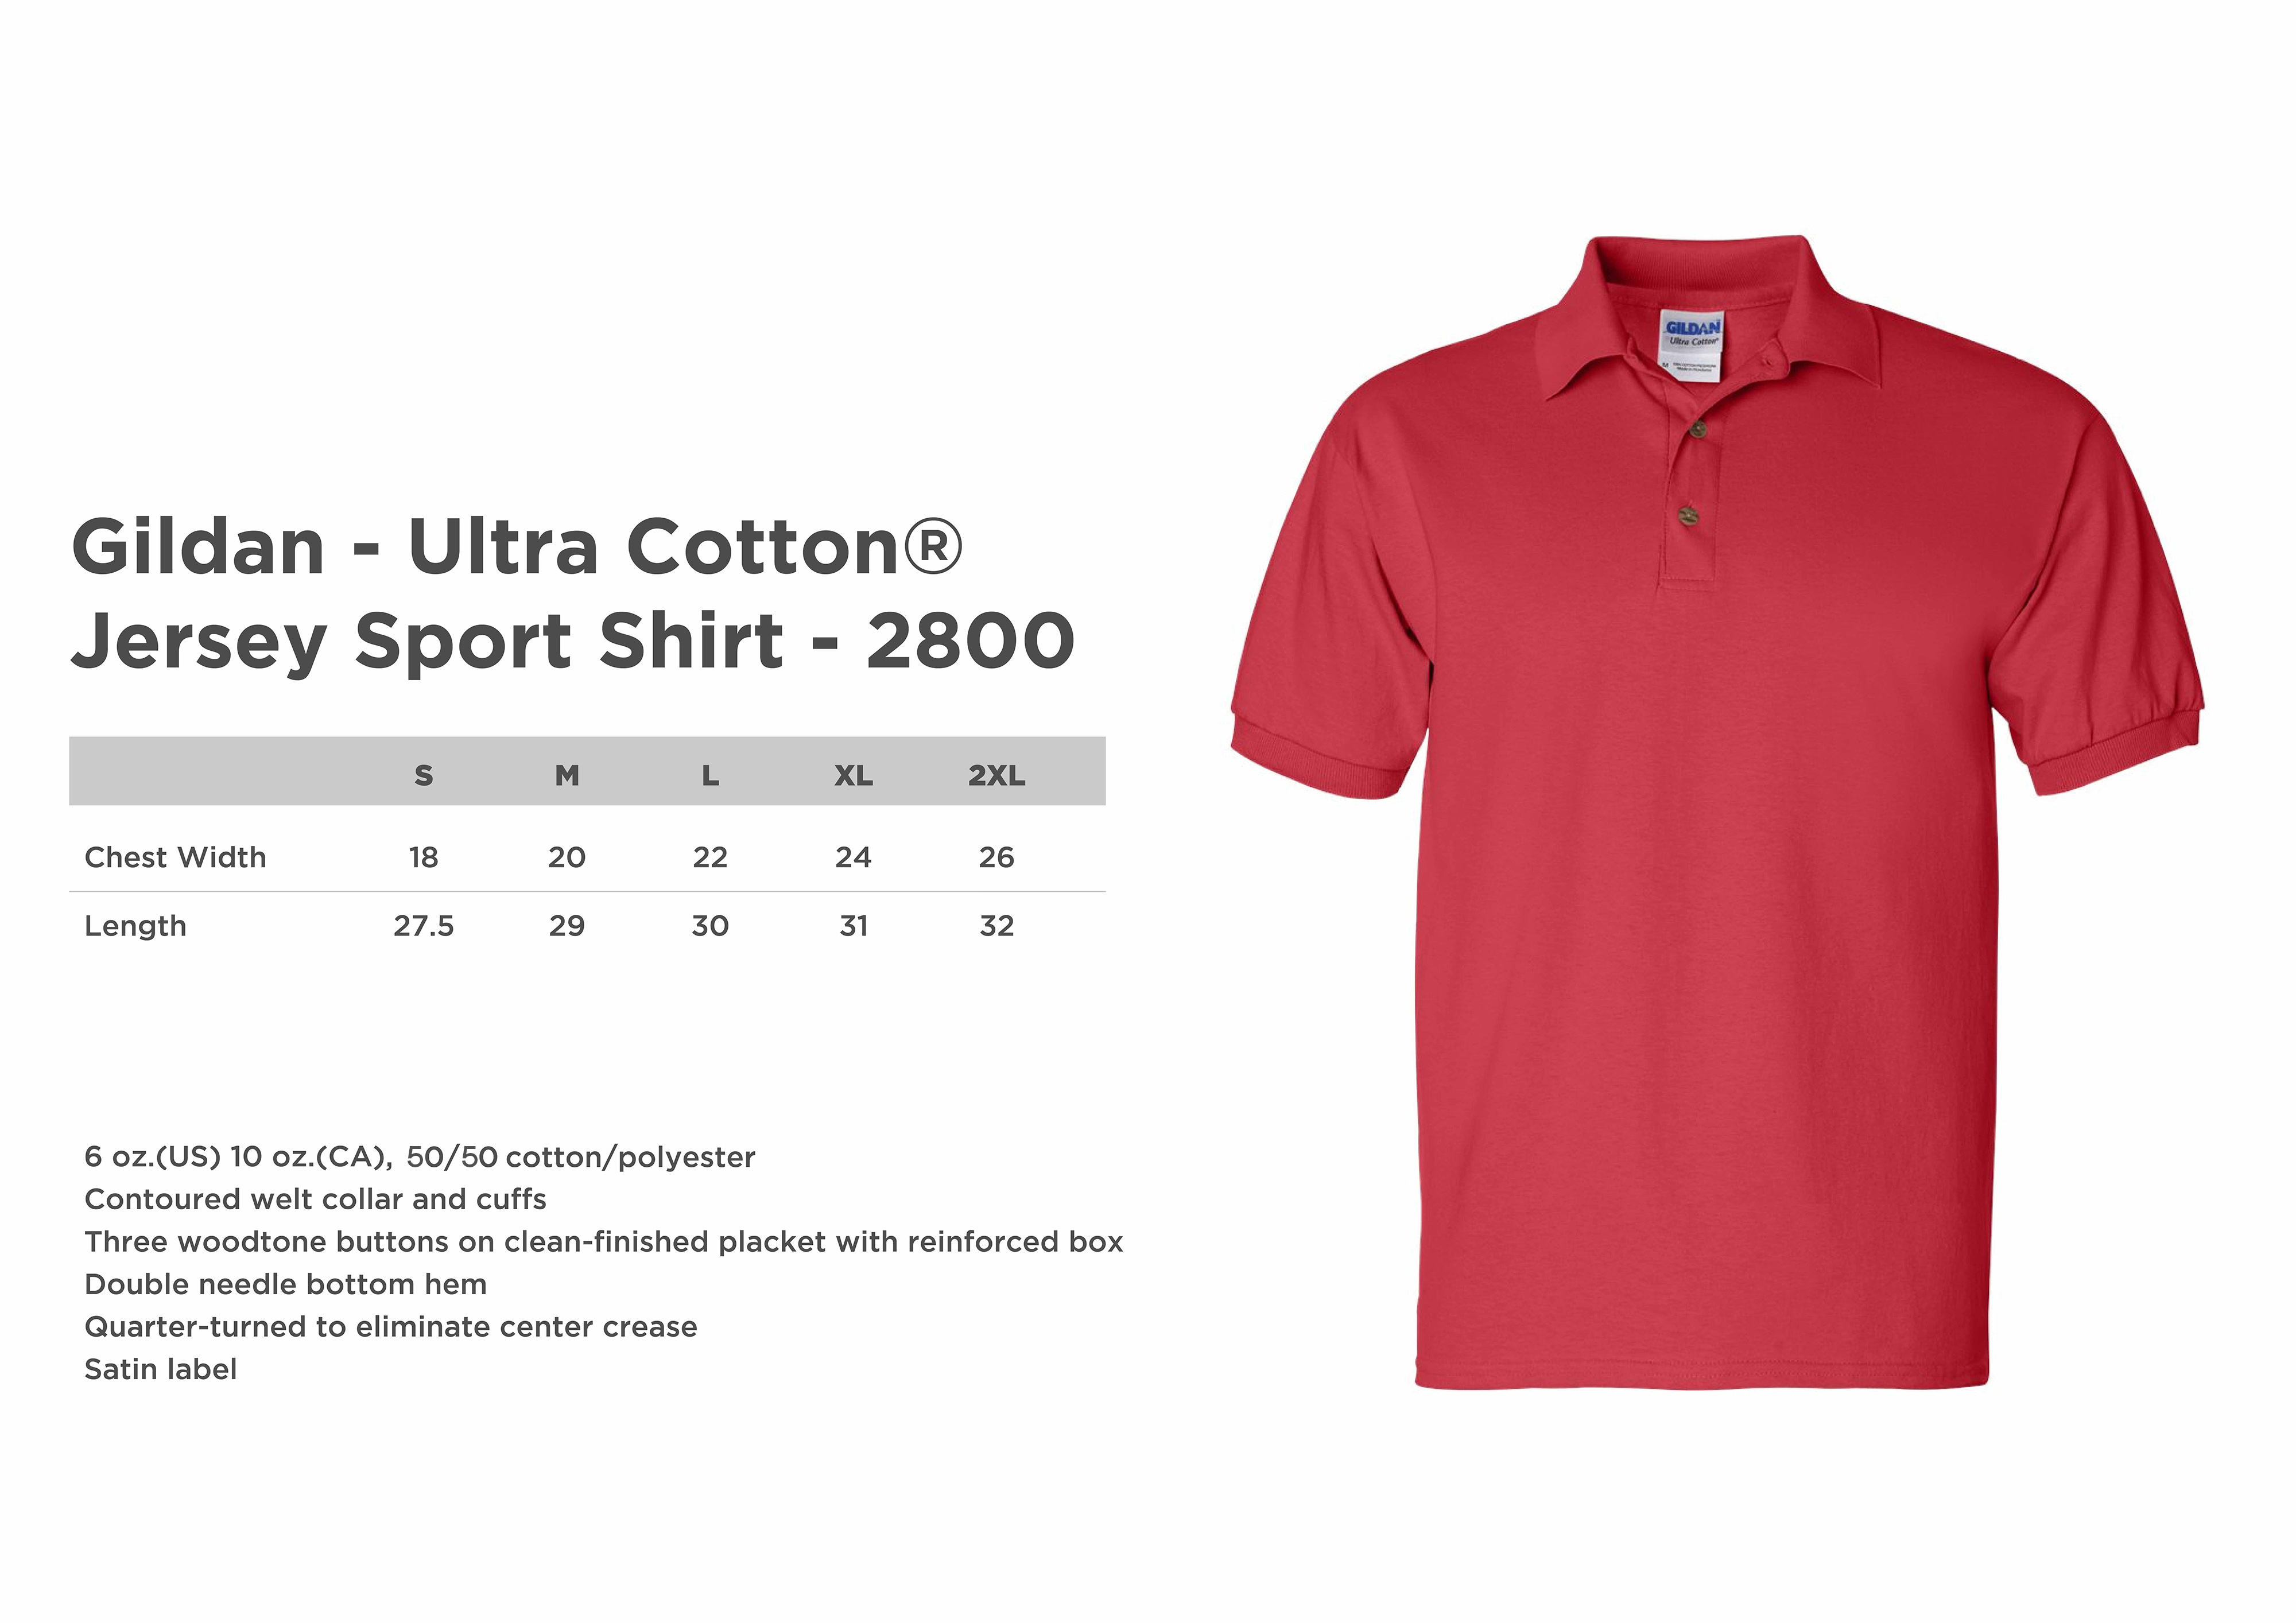 Gildan Ultra Cotton Jersey Sport Shirt Red Shirts for Men Polo Shirts for Men 2800 S M L XL 2XL Button Down T Shirts for Mens Polo Shirts with Colors Business Casual School - image 2 of 2